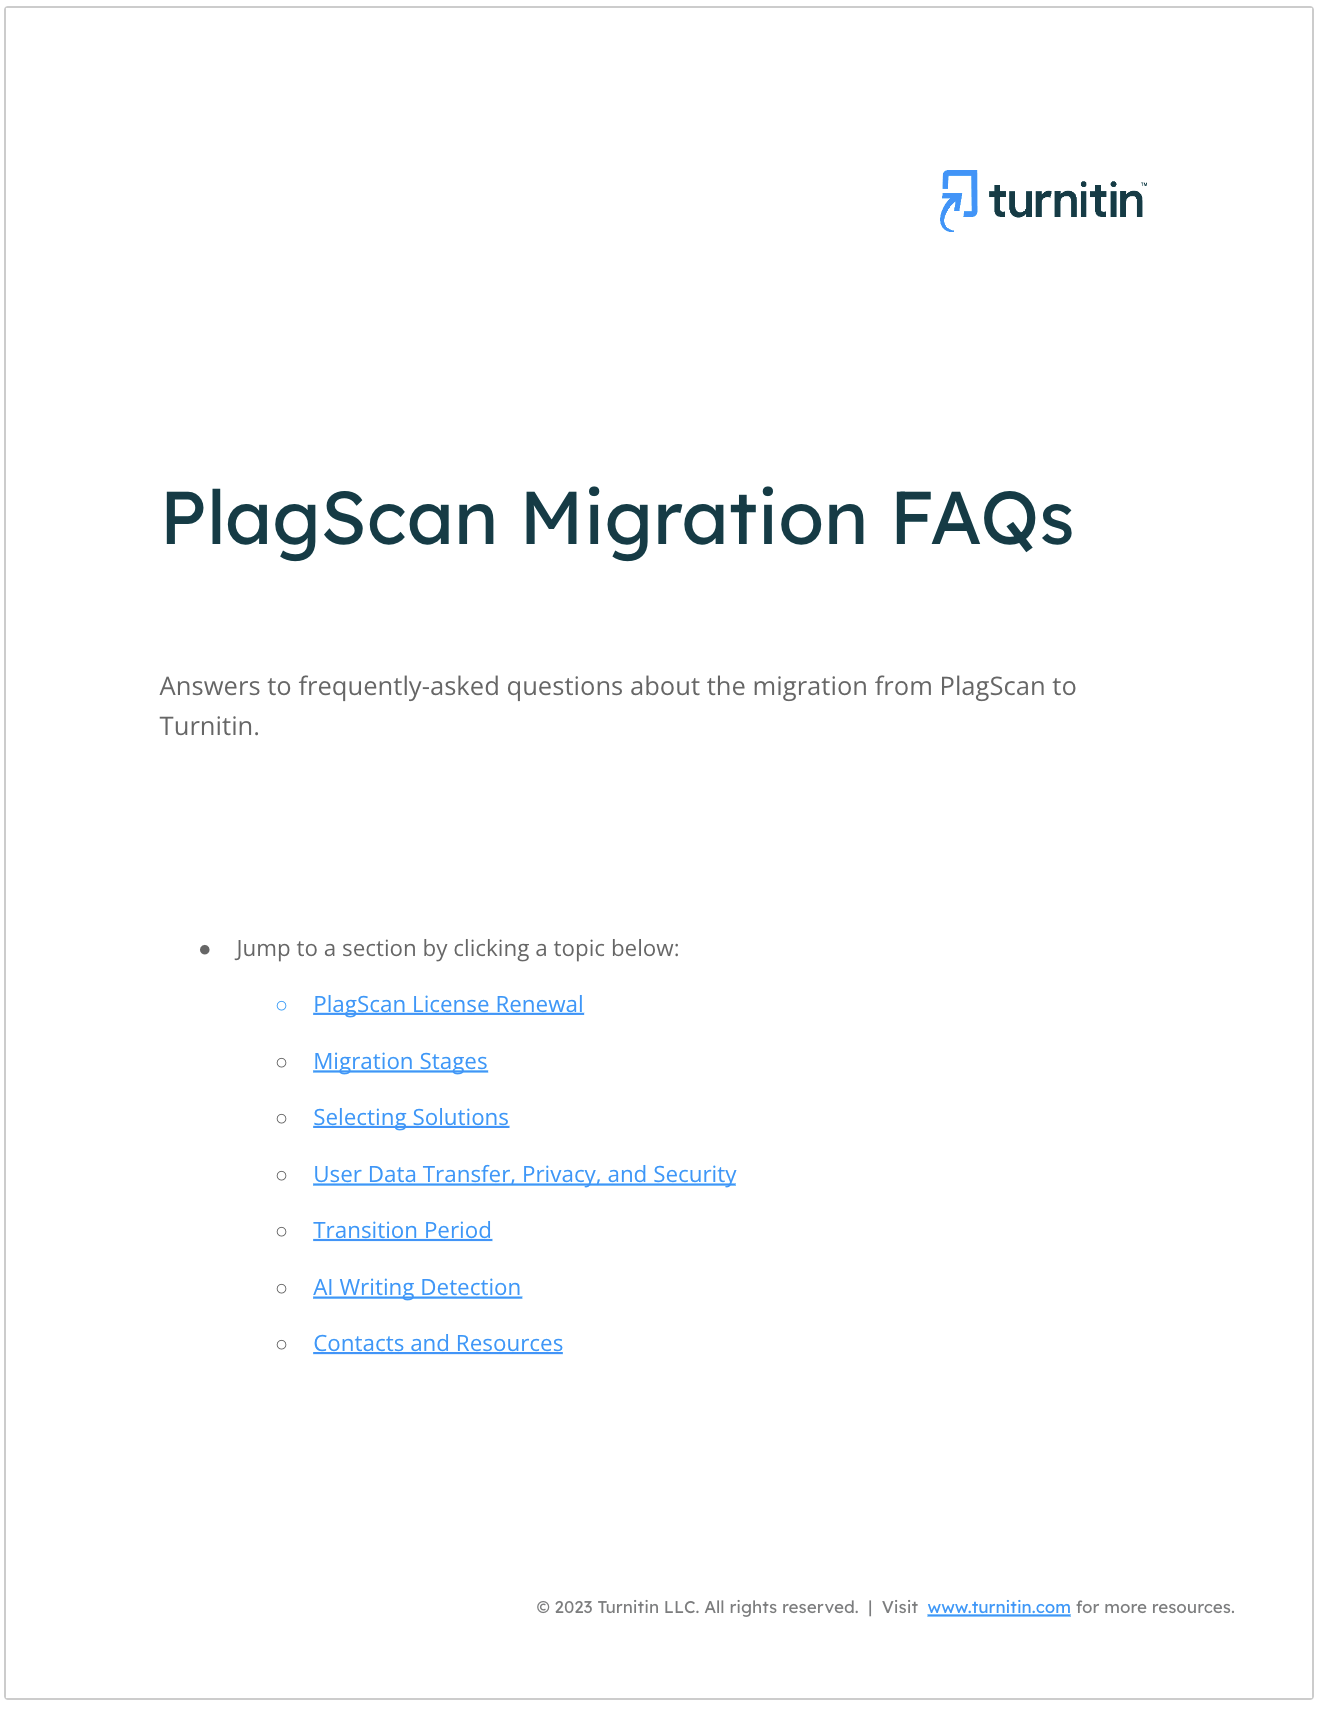 PlagScan Migration FAQs-English